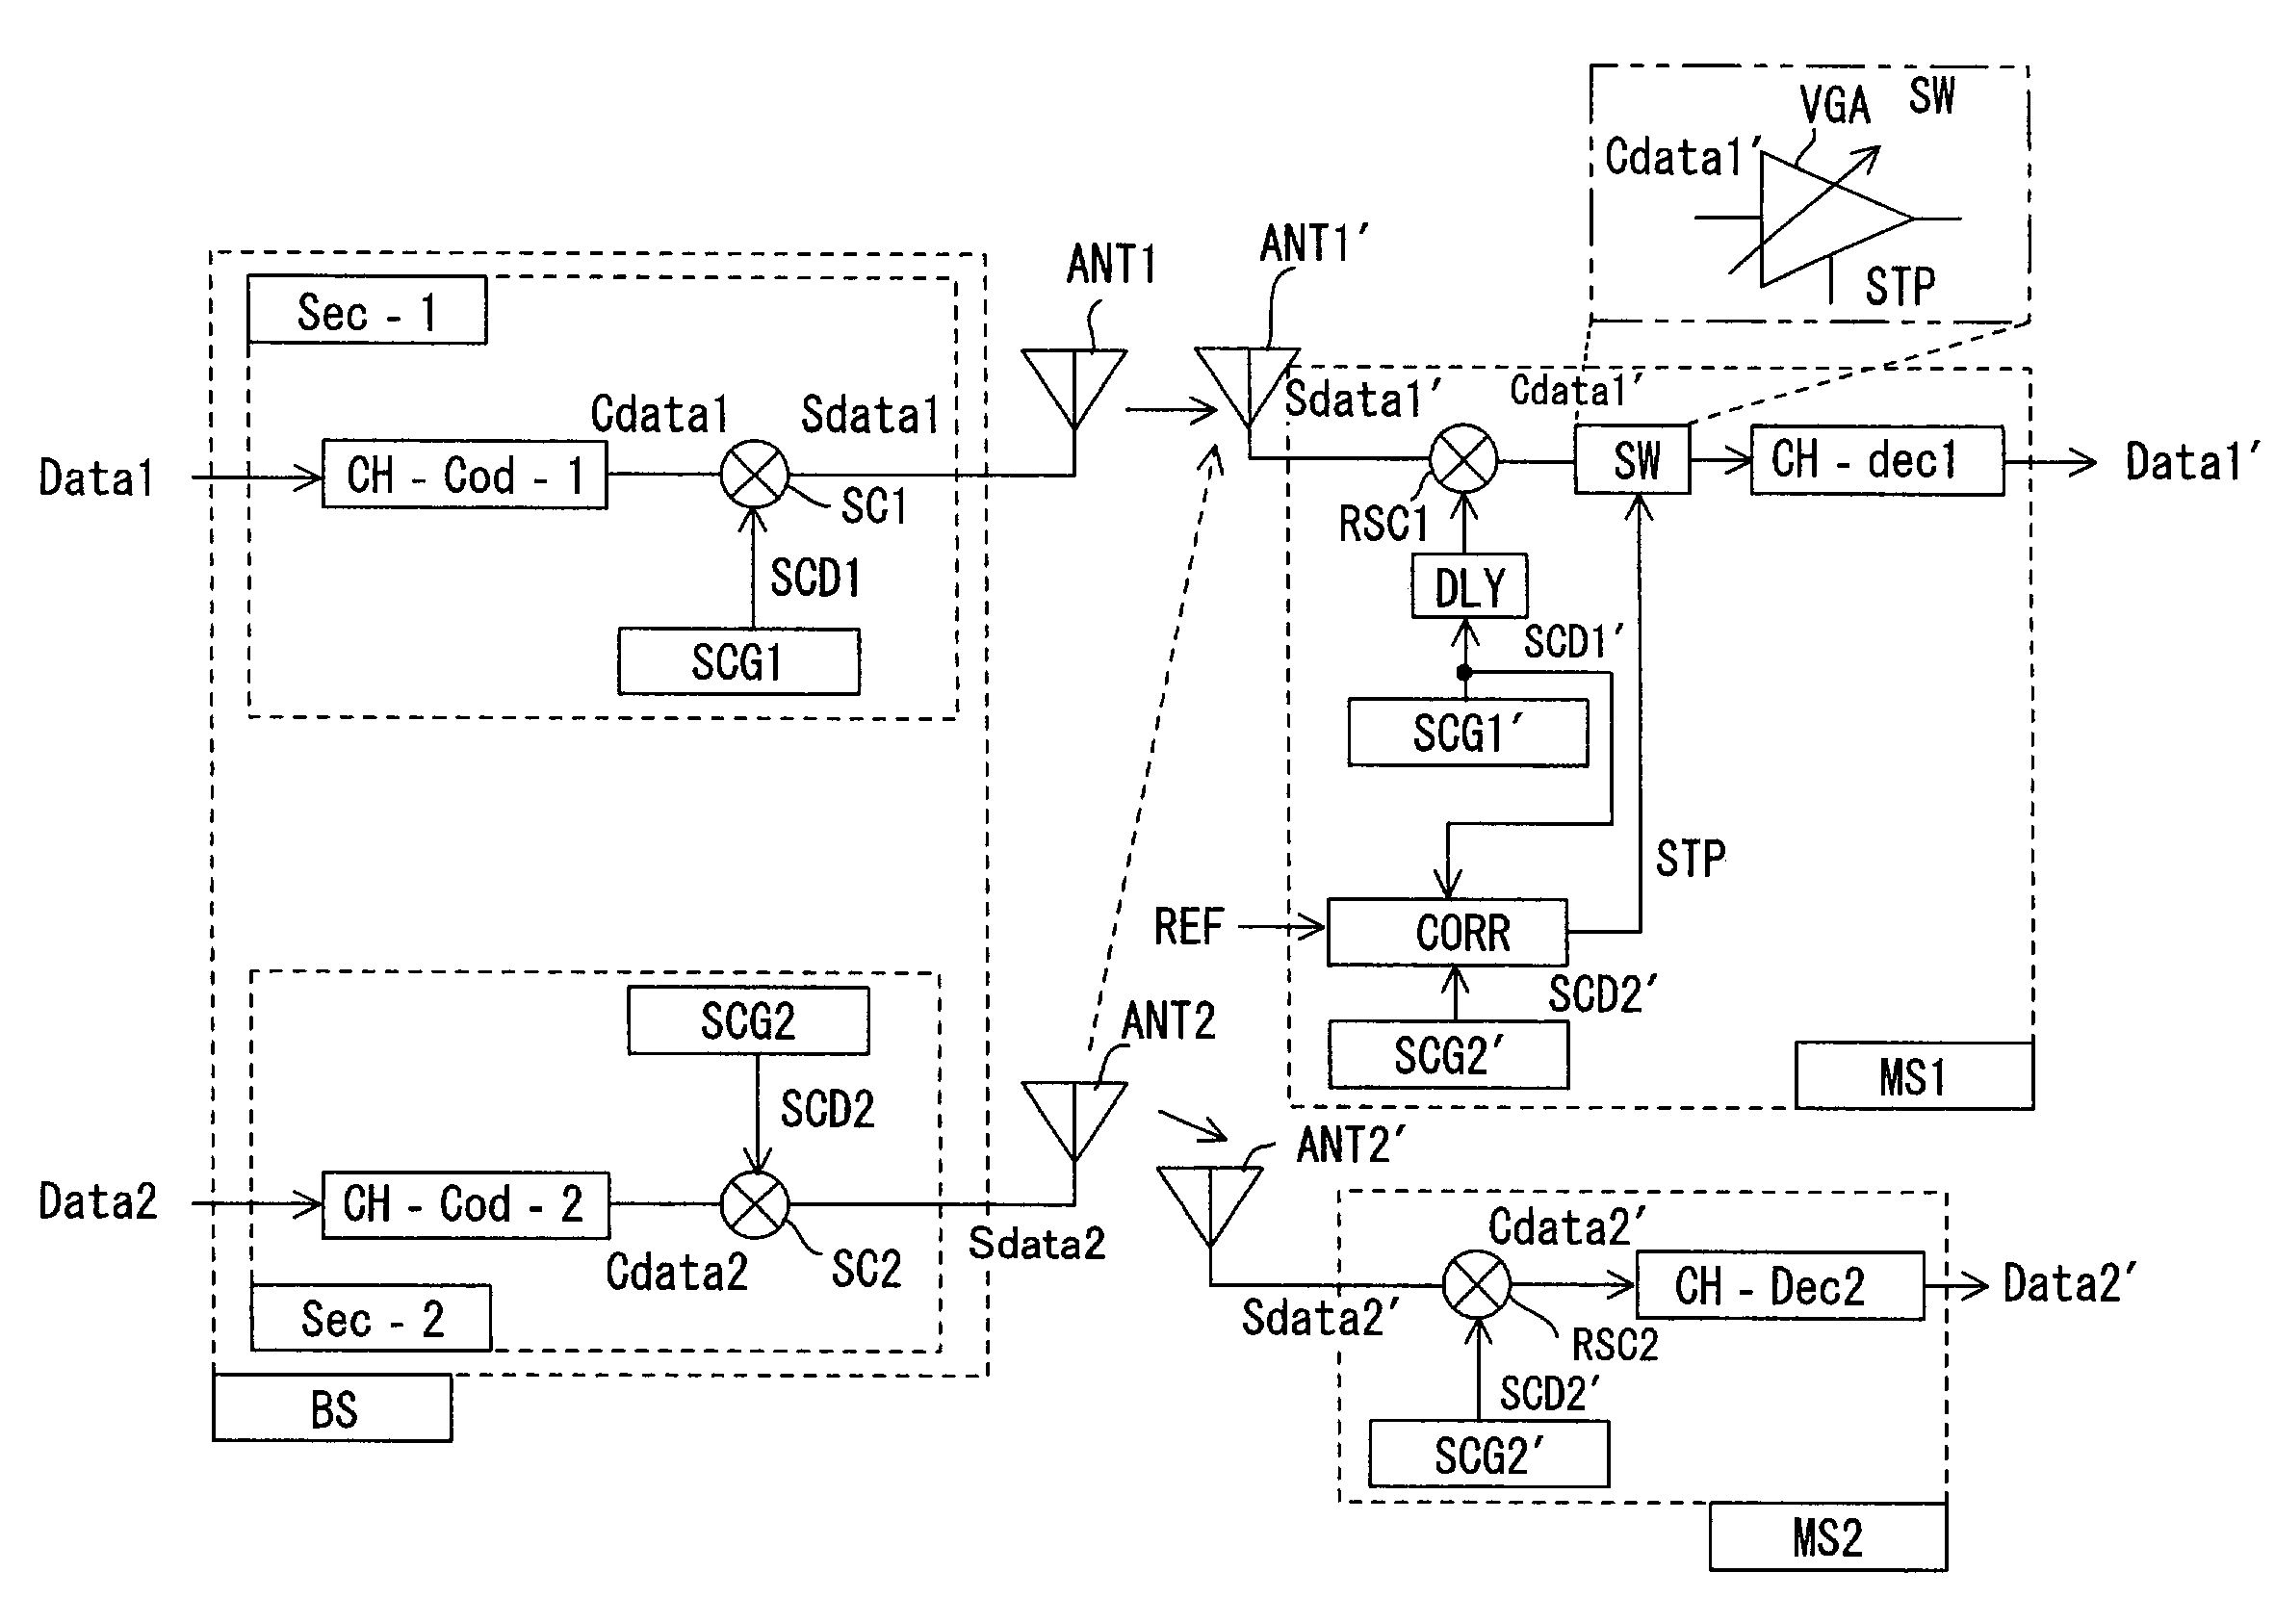 Code division multiple access signal receiving apparatus